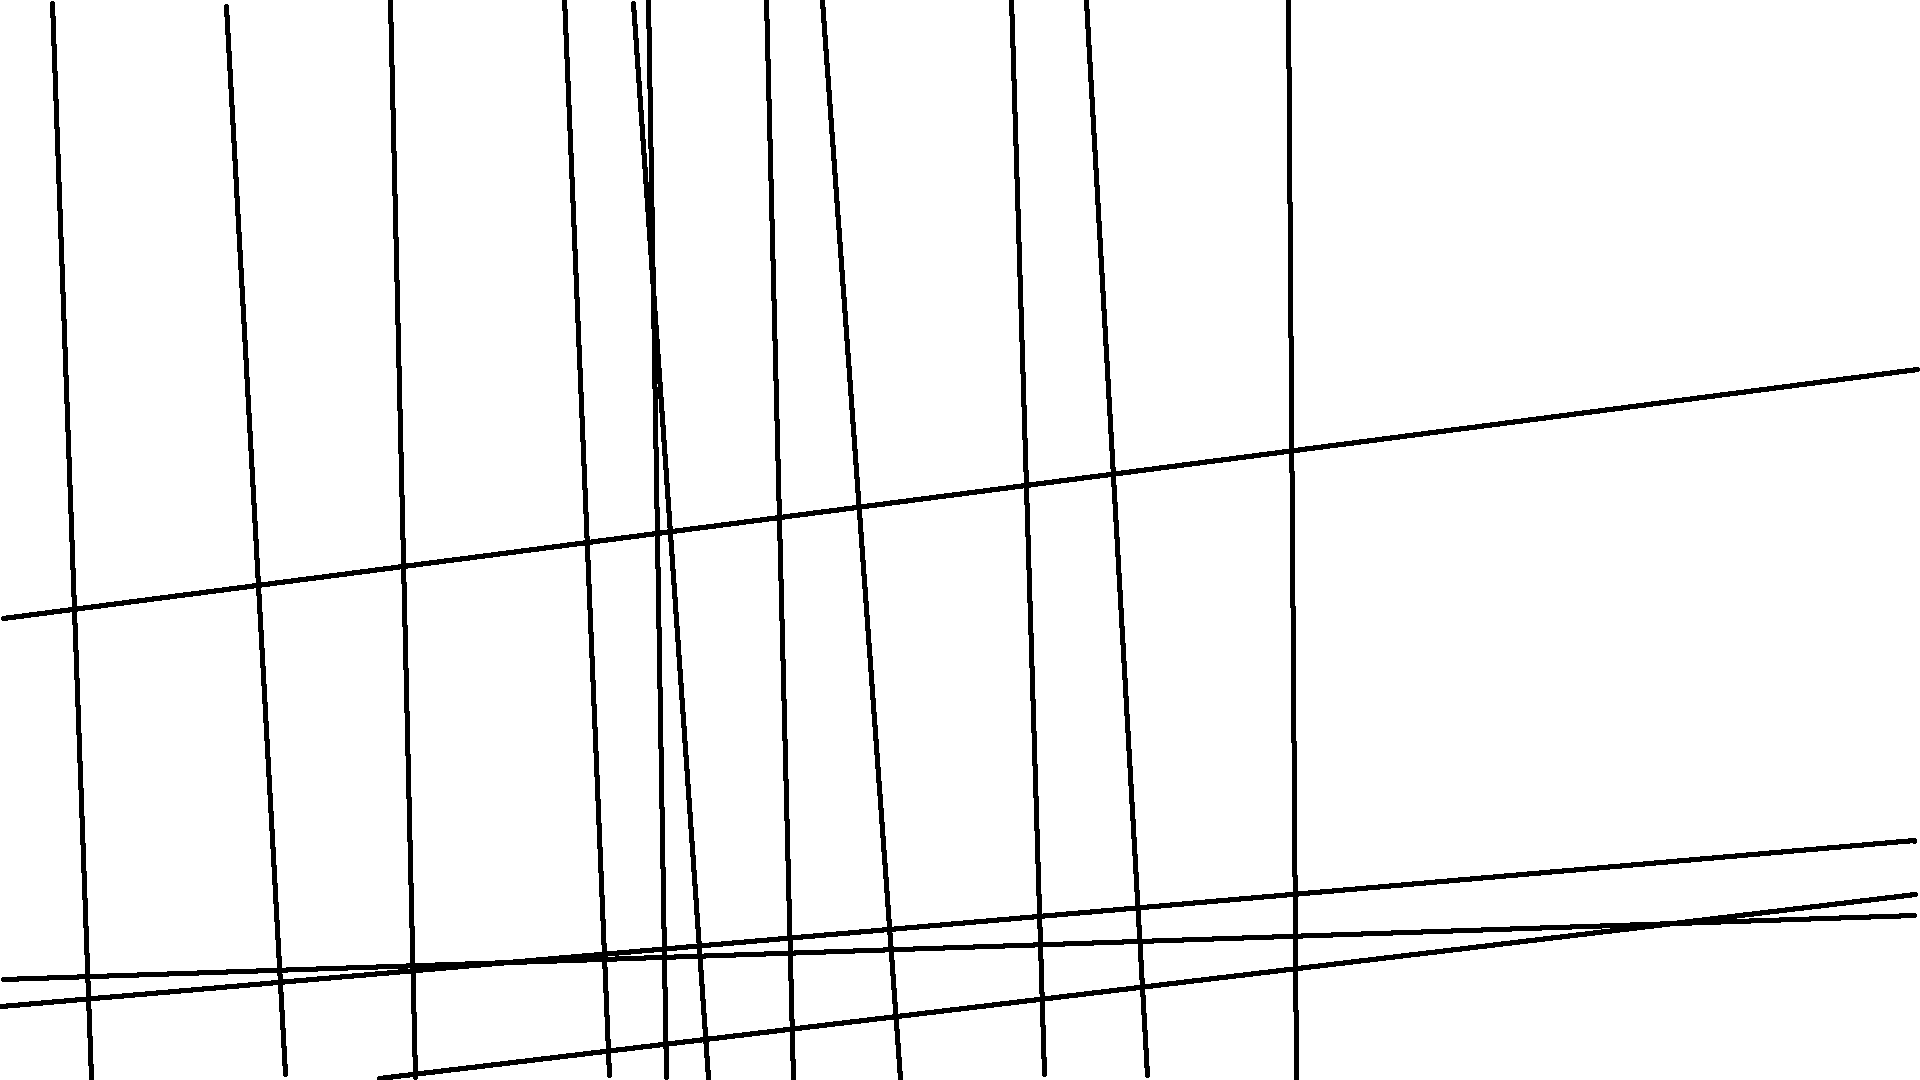 2020-03-13 Bahnfahrt Linienkomposition